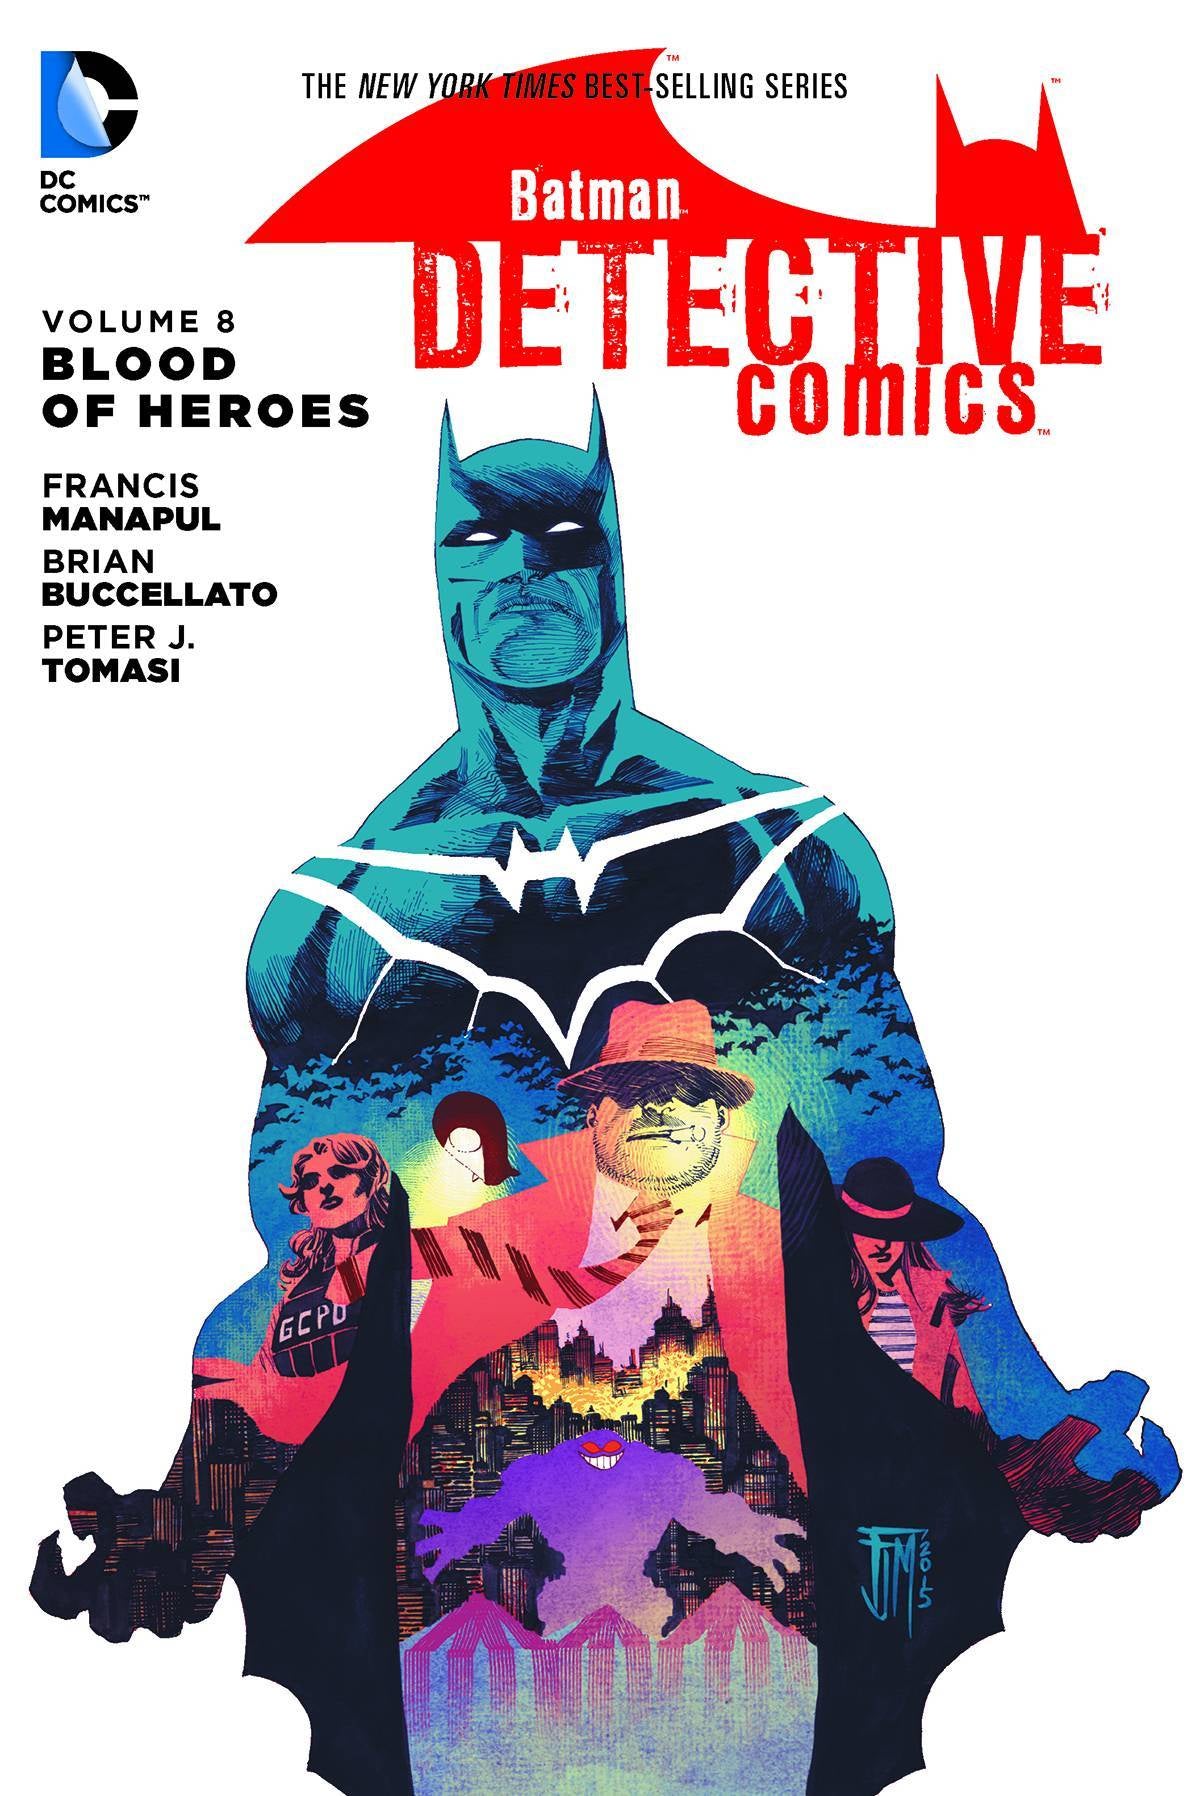 BATMAN DETECTIVE COMICS VOLUME 08 BLOOD OF HEROES